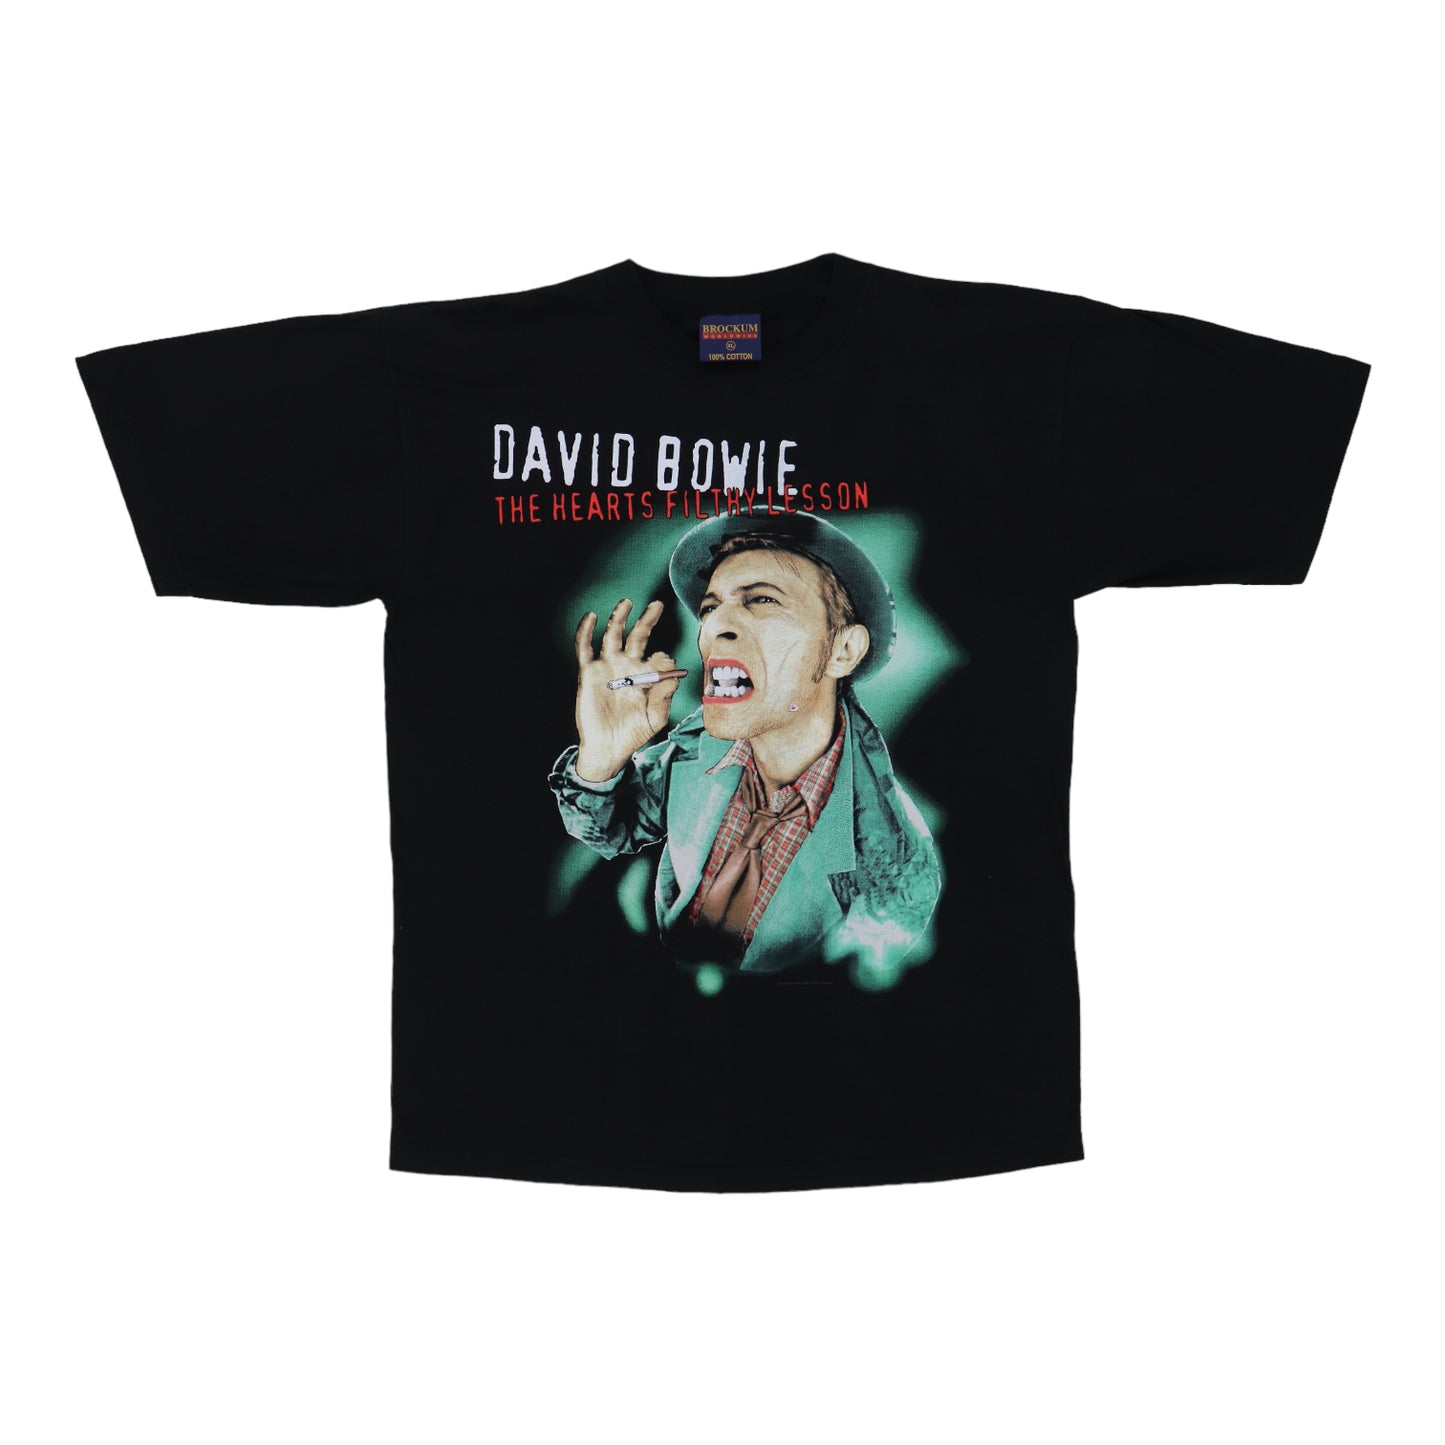 1995 David Bowie The Hearts Filthy Lesson Tour Shirt